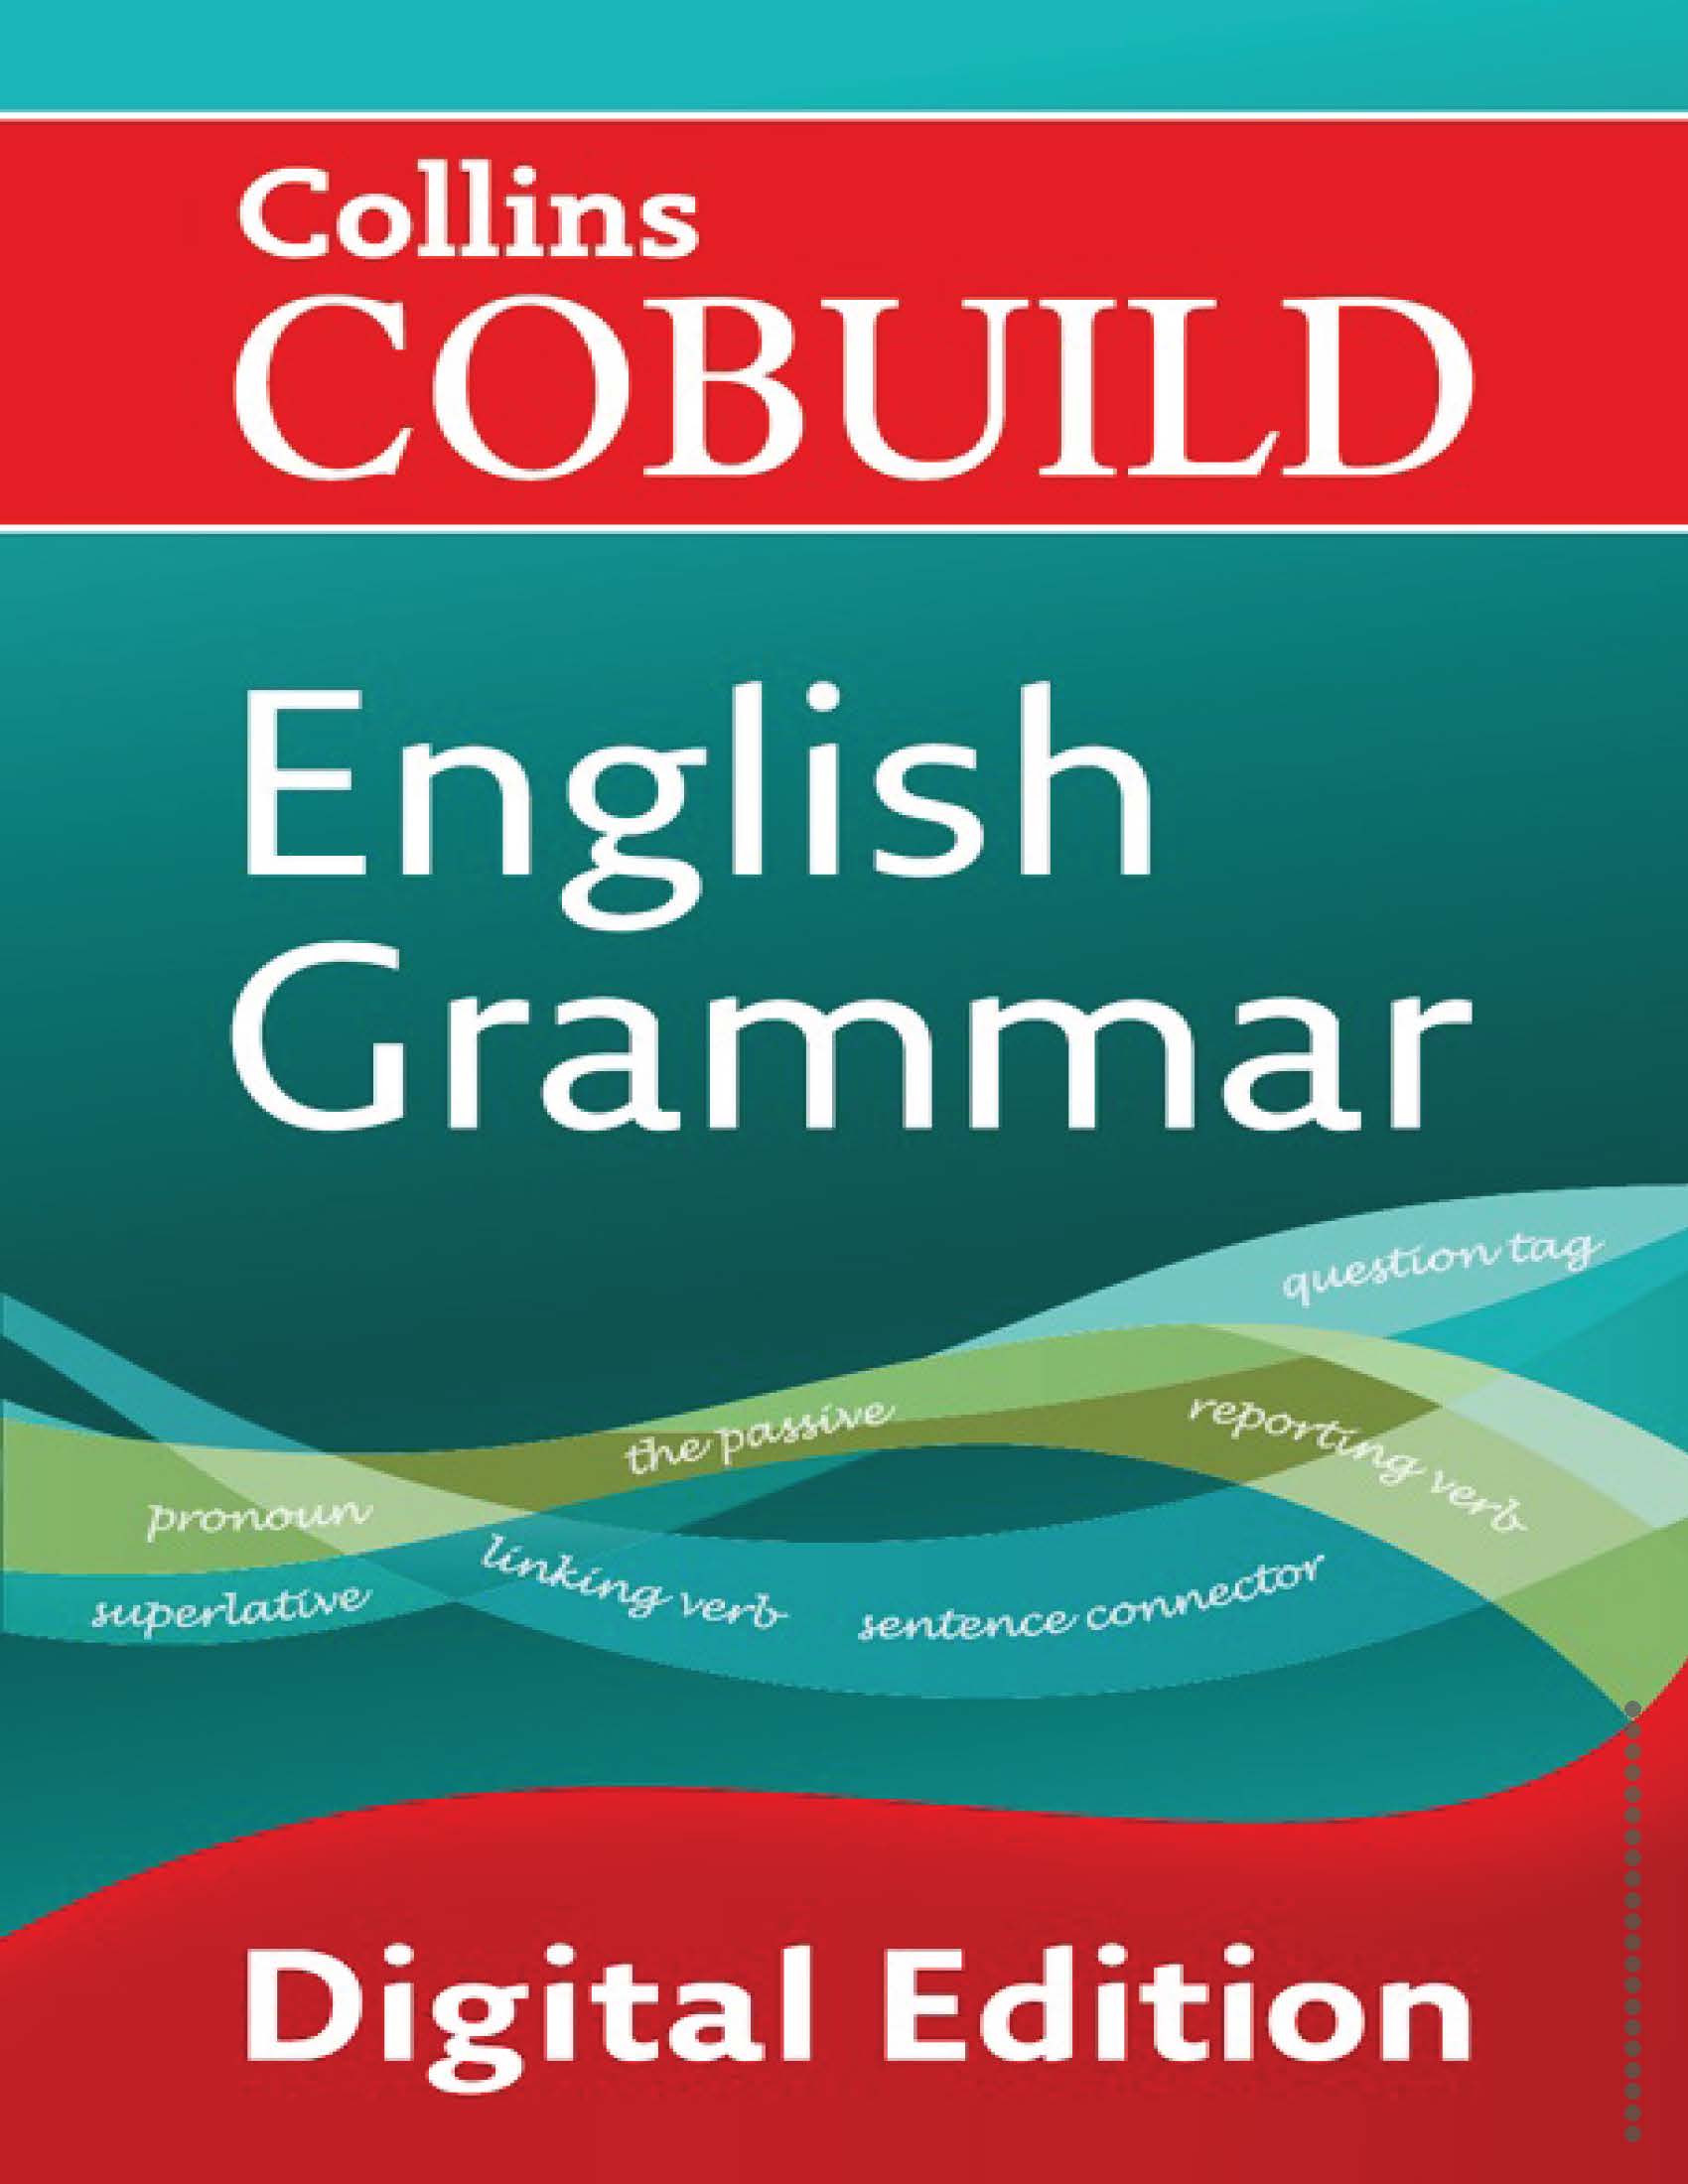 COLLINS COBUILD ENGLISH GRAMMAR